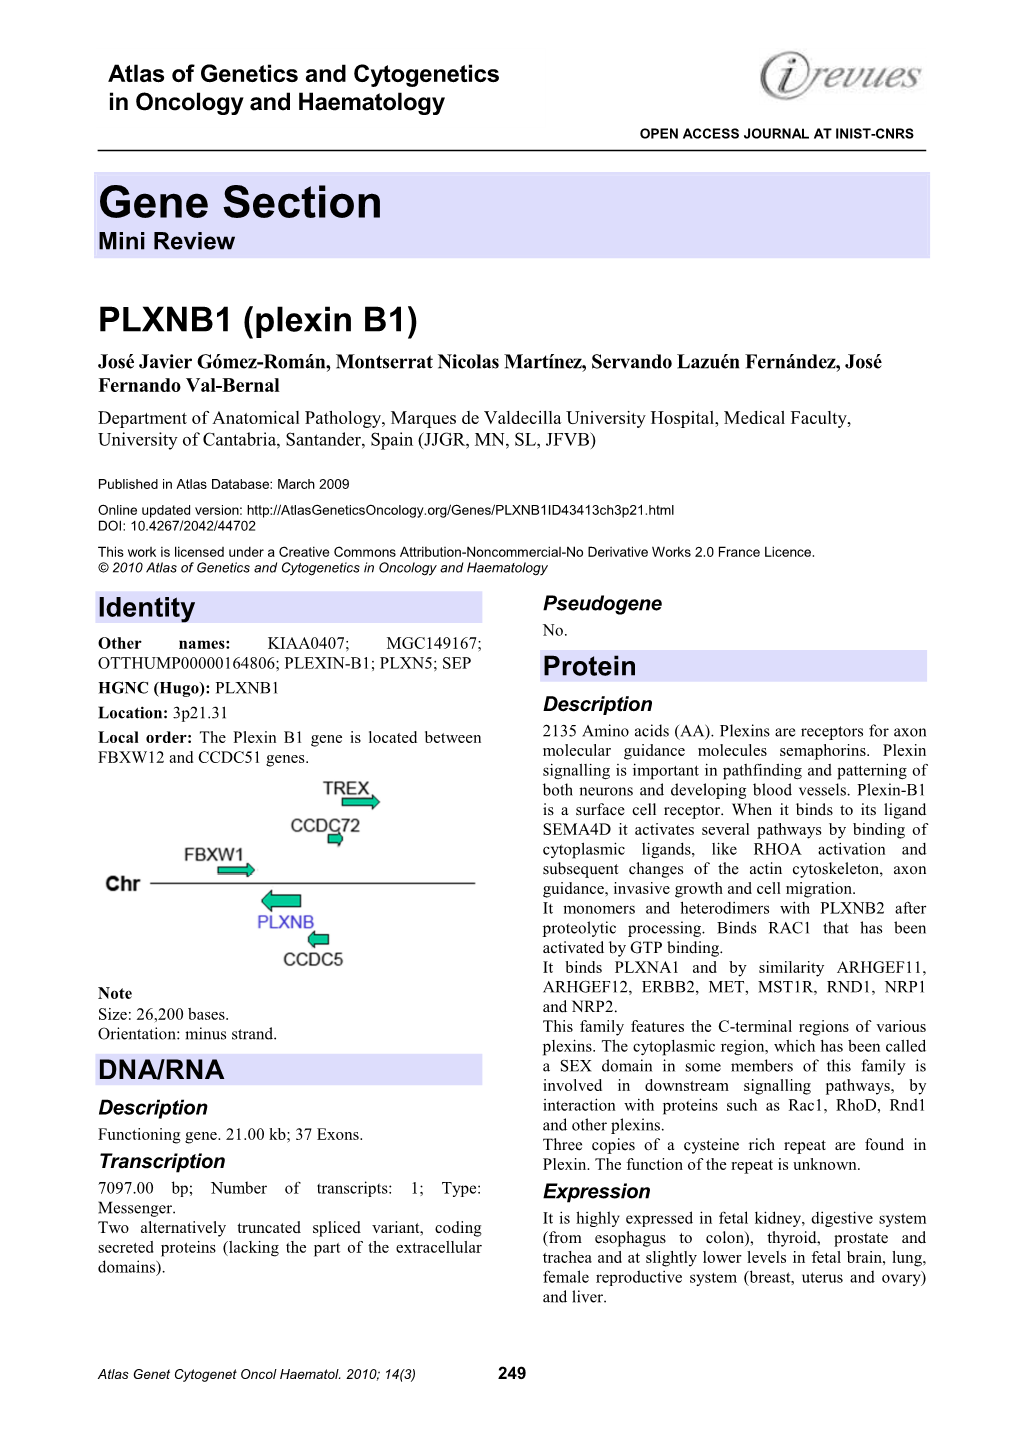 PLXNB1 (Plexin